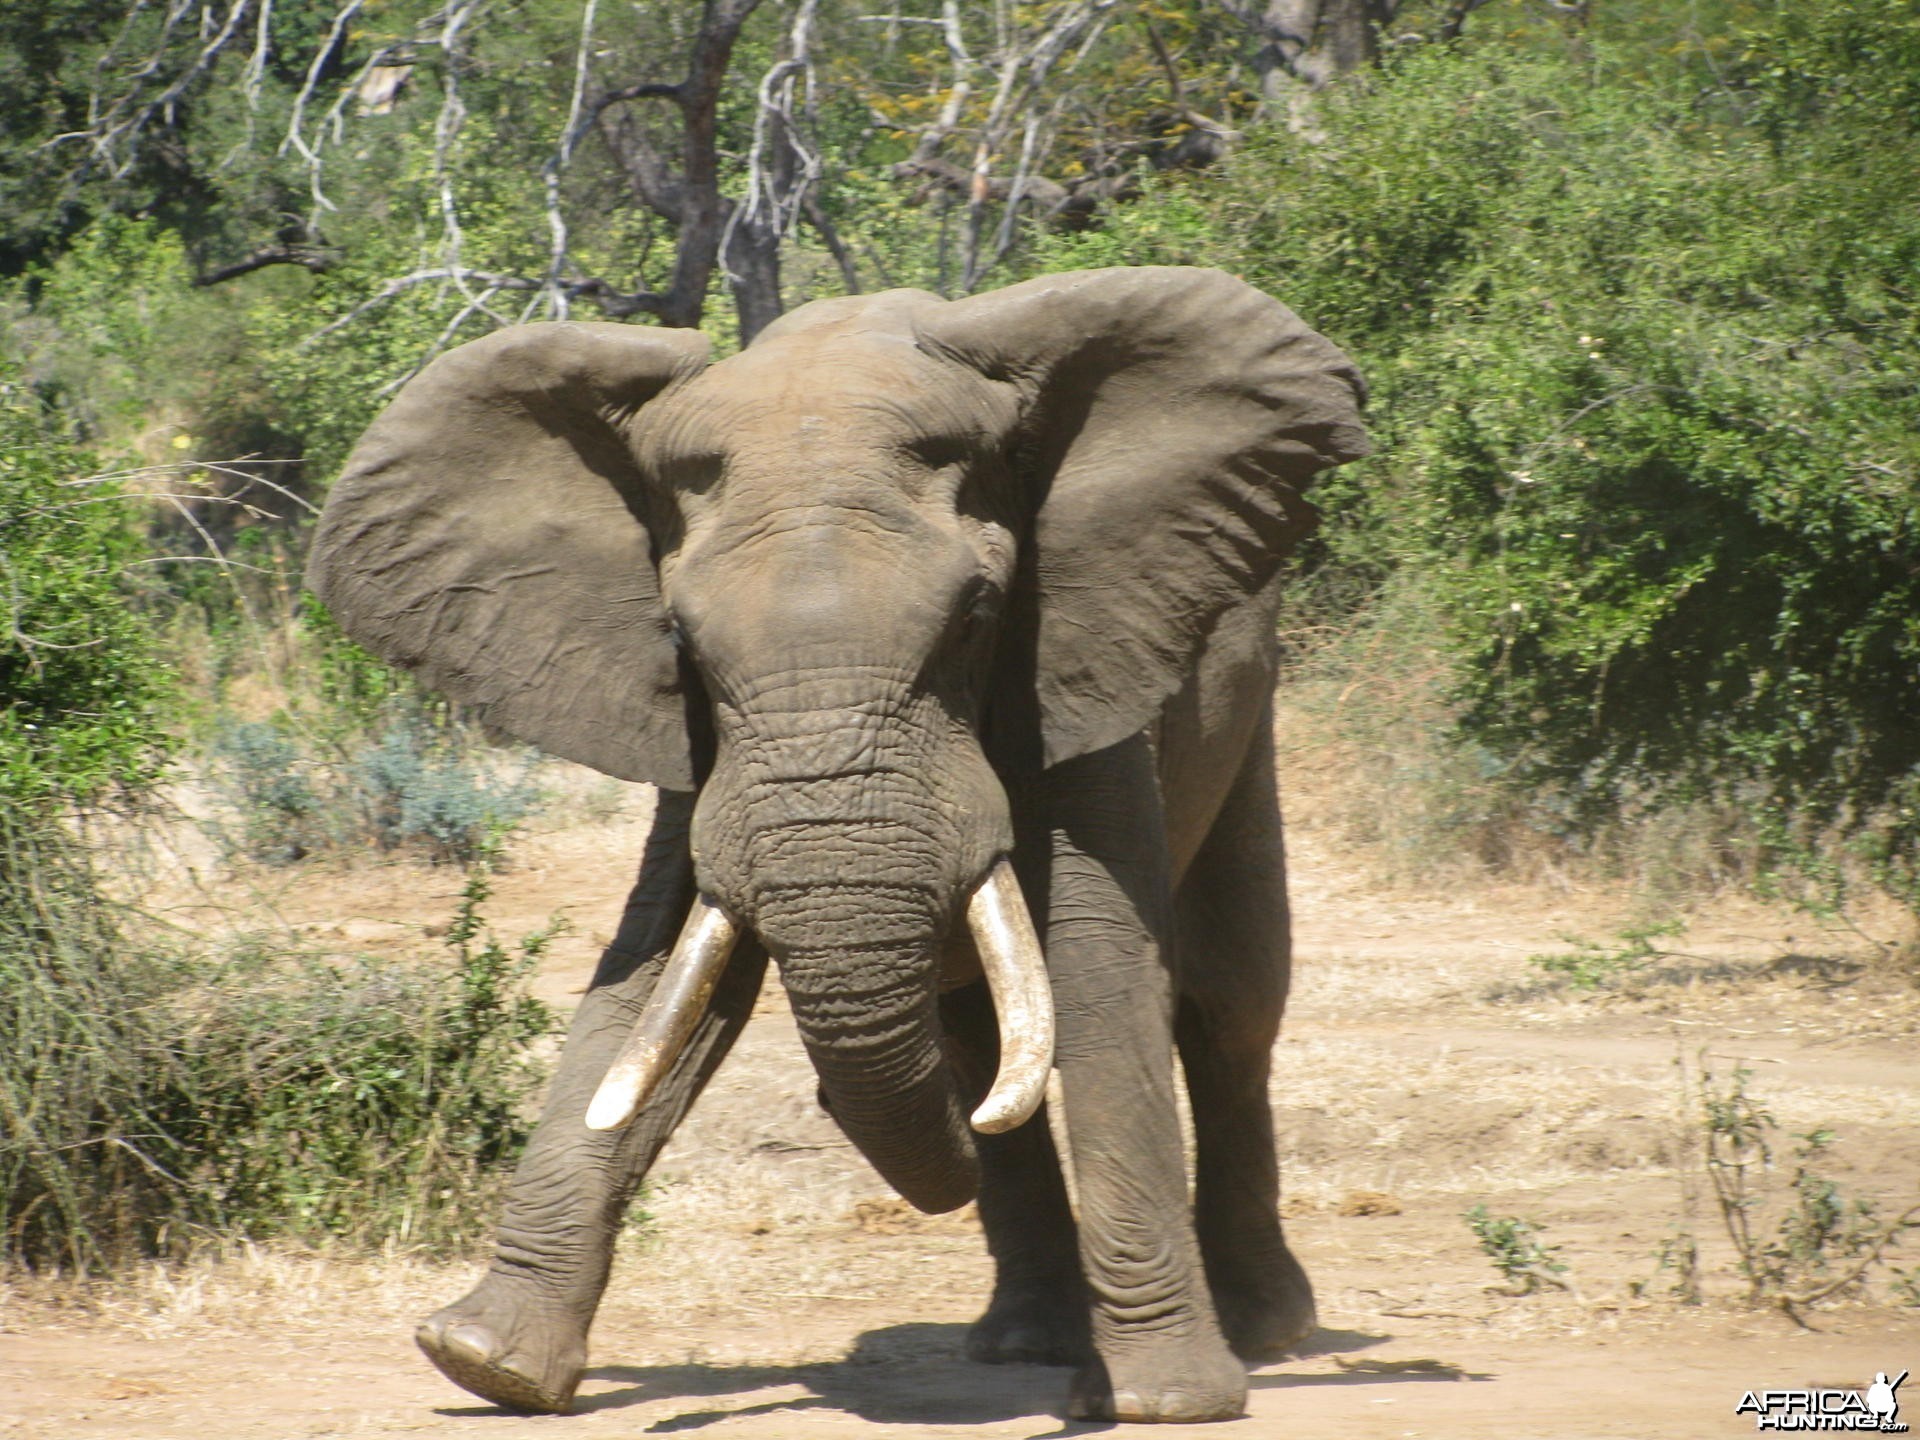 Elephant bluff charge